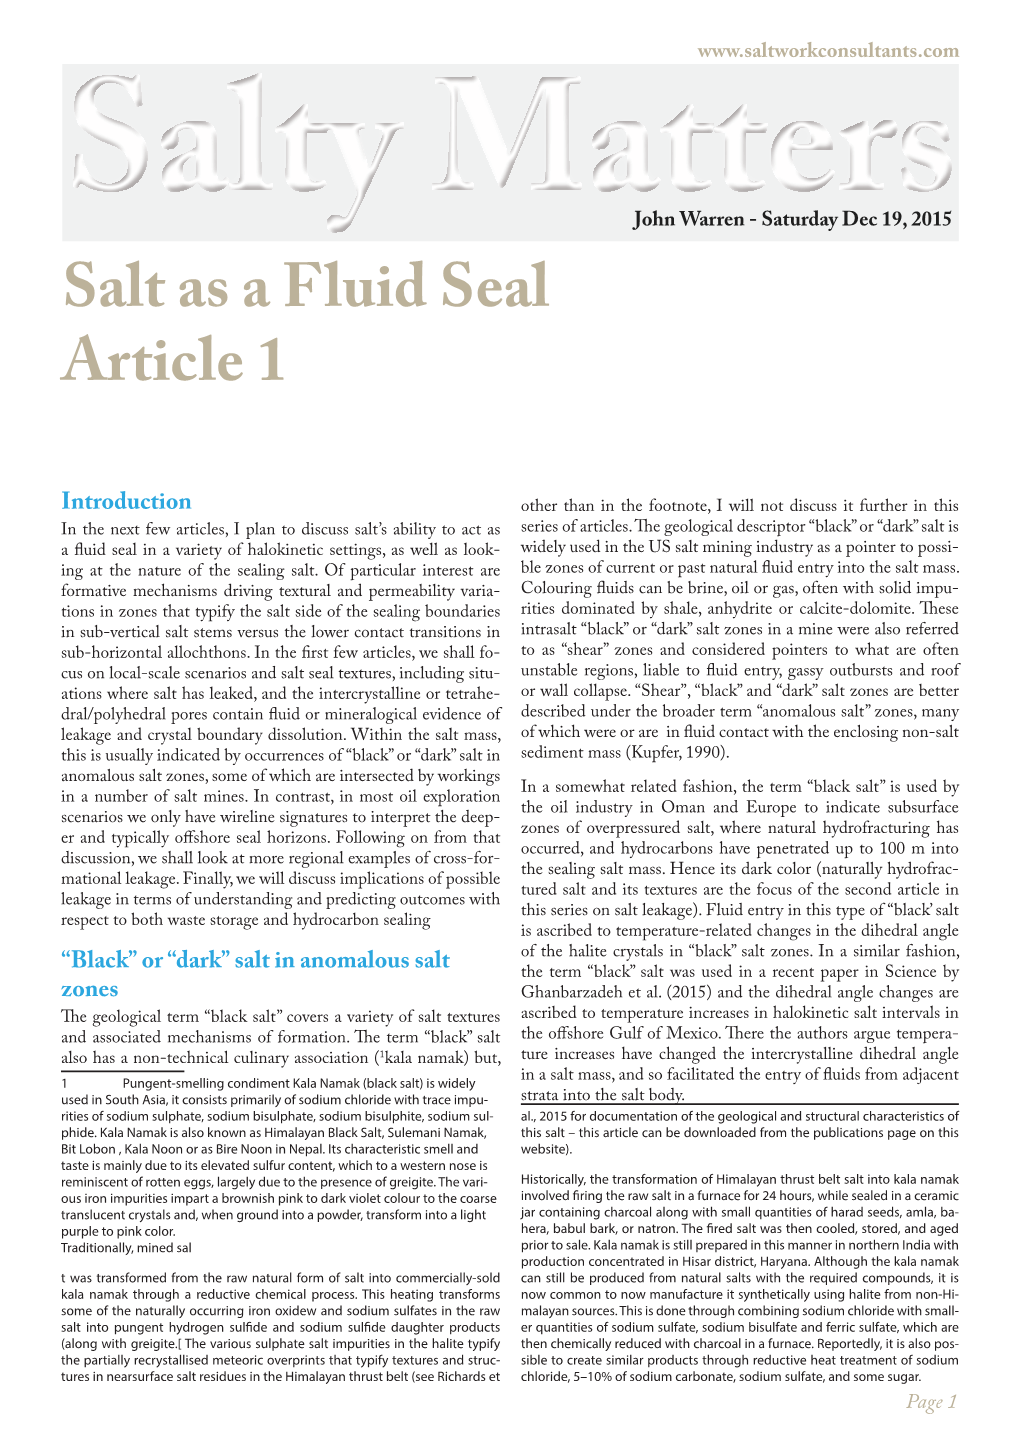 Warren, J. K., Salt As a Fluid Seal: Article 1 of 4